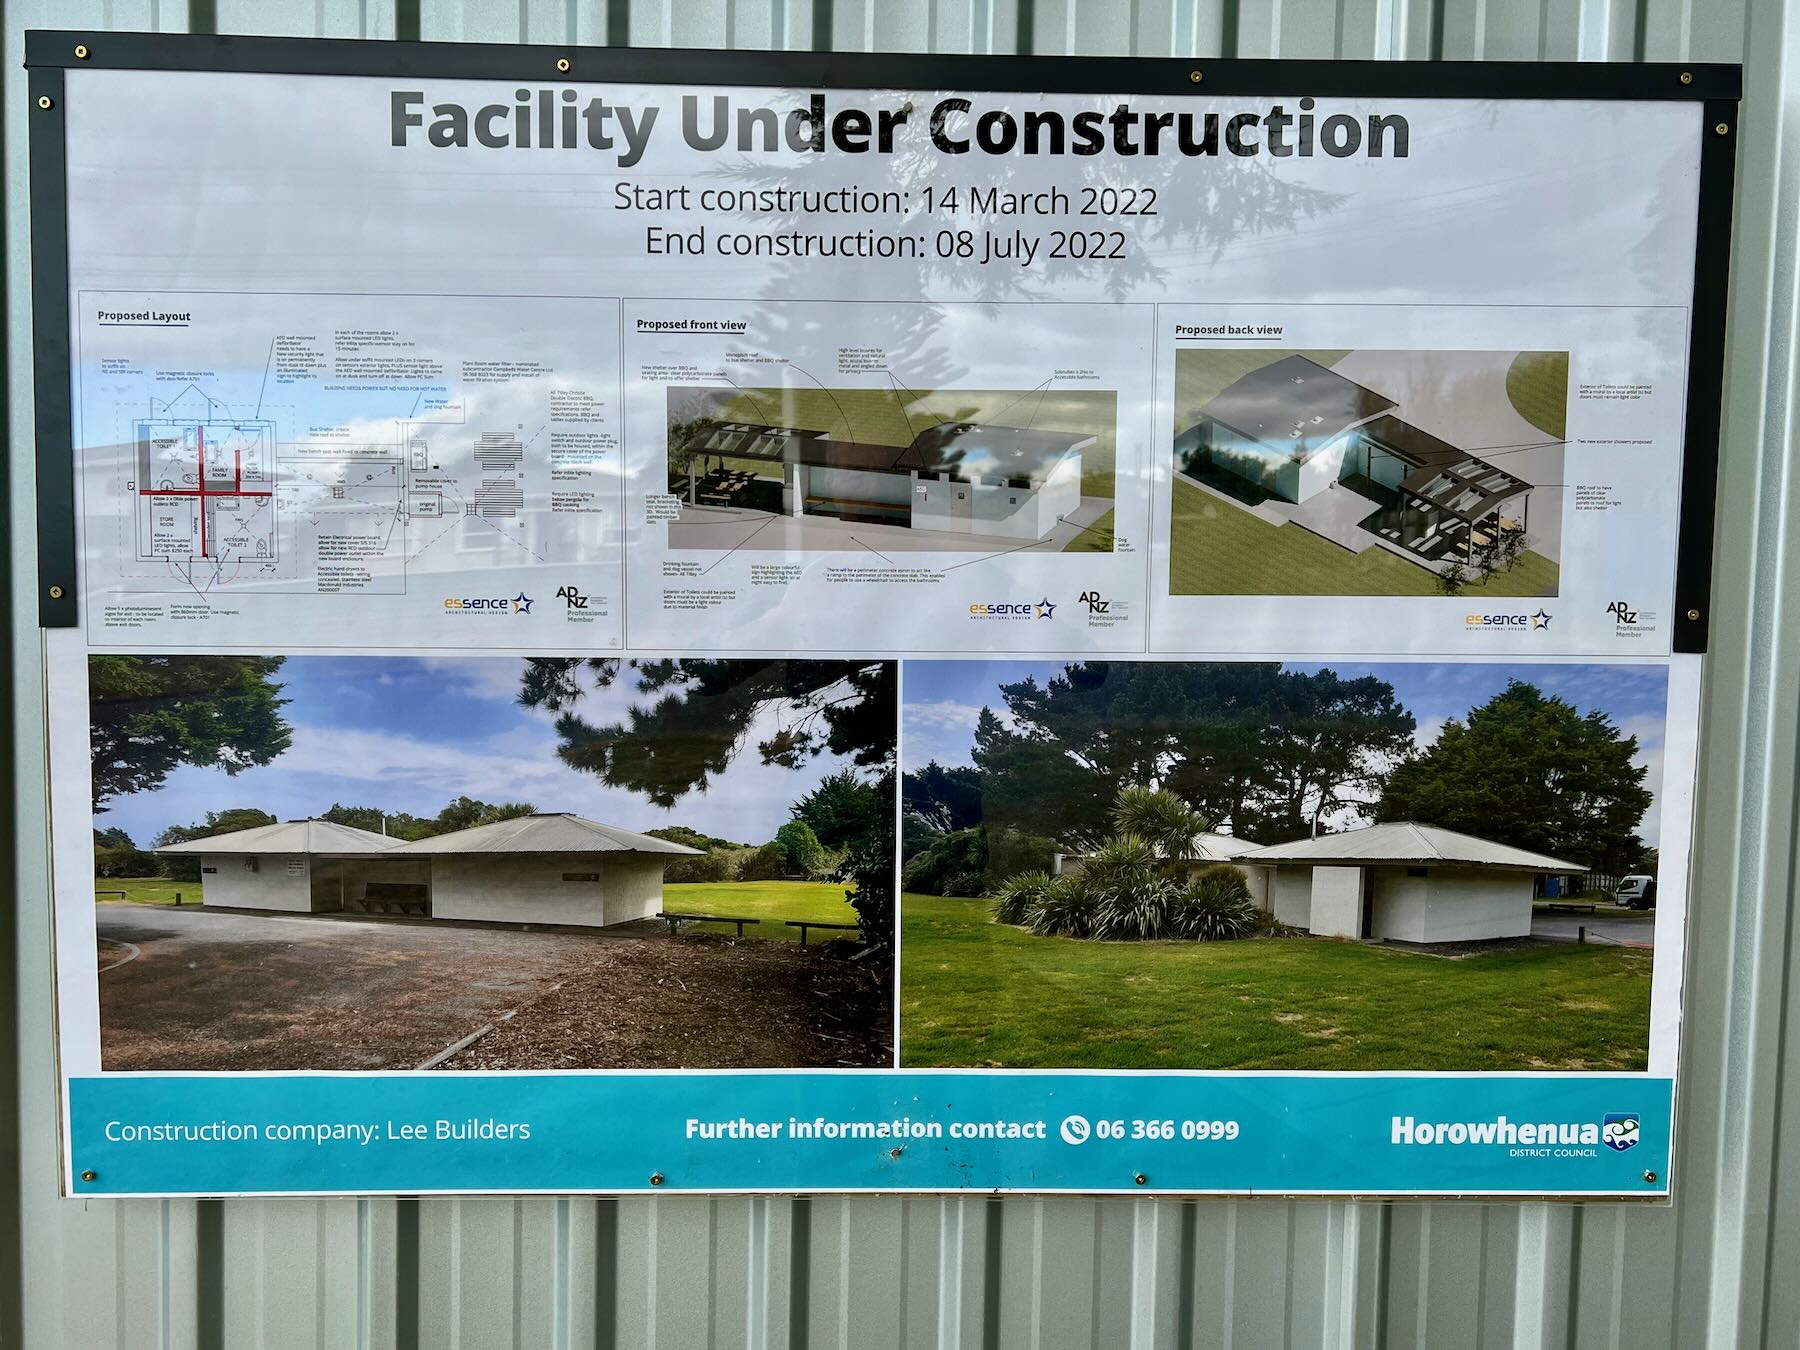 Facility Under Construction information board. 